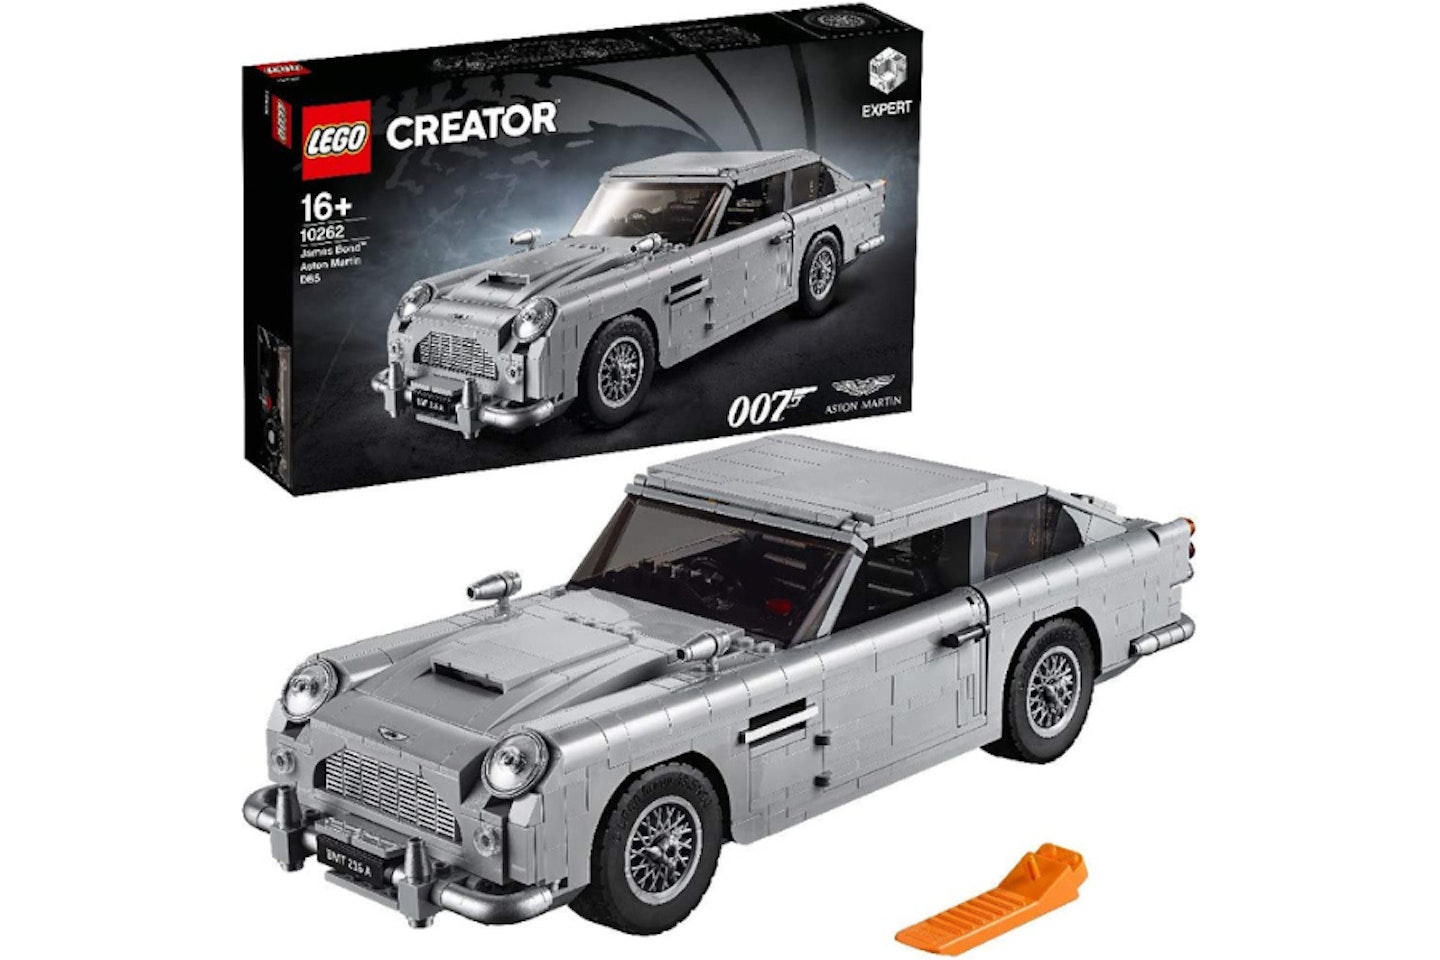 LEGO 10262 Creator Expert James Bond Aston Martin DB5 Model Car